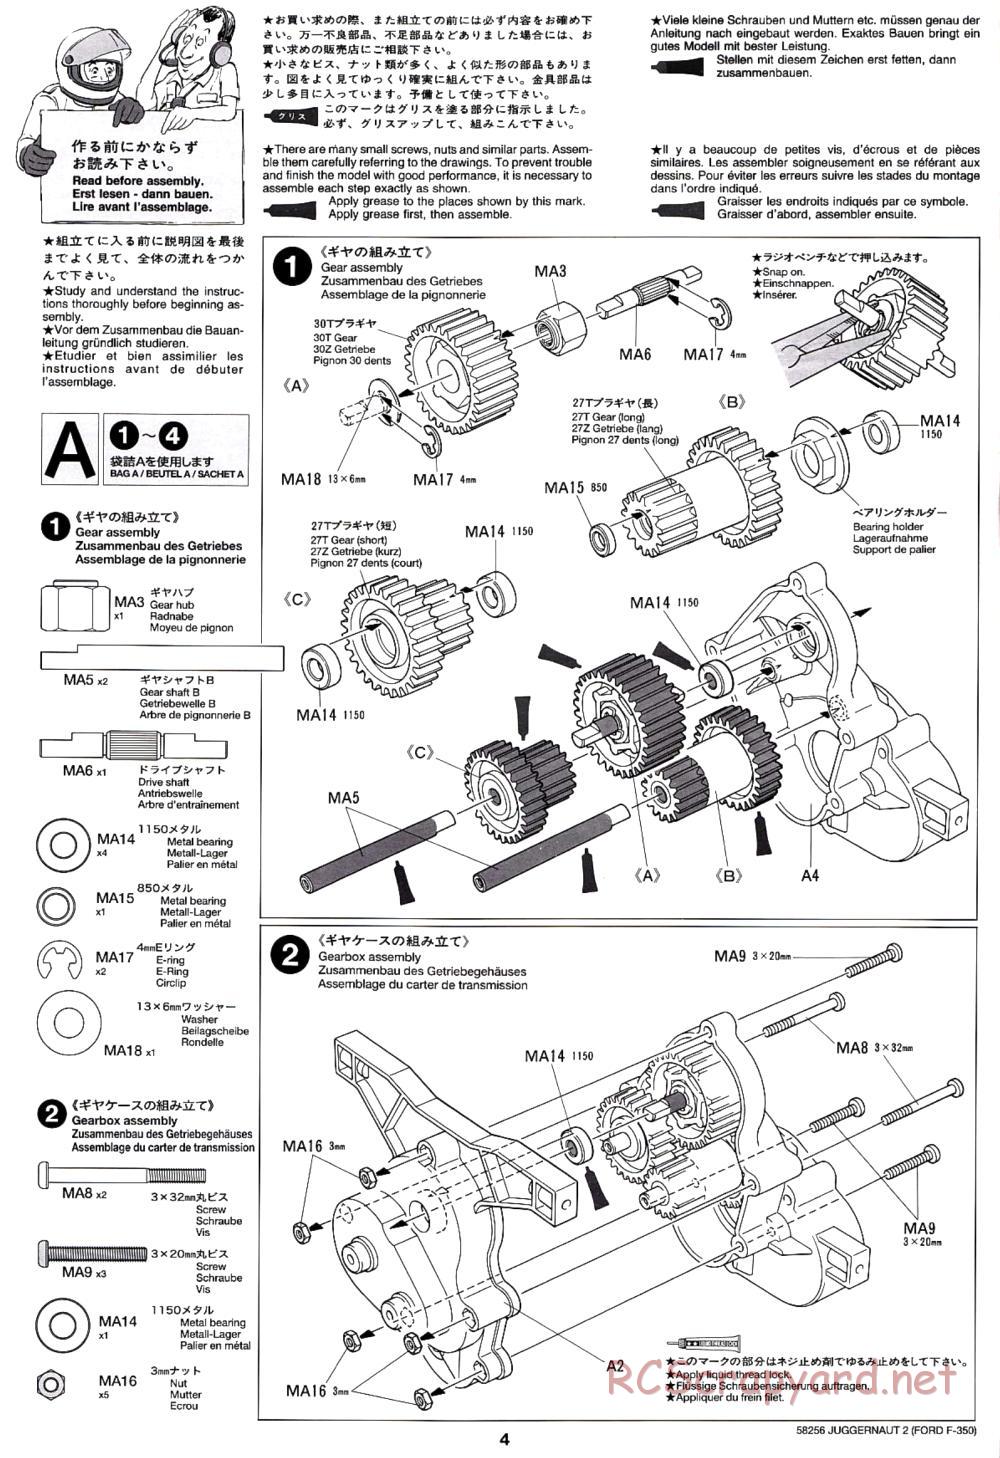 Tamiya - Juggernaut 2 Chassis - Manual - Page 4